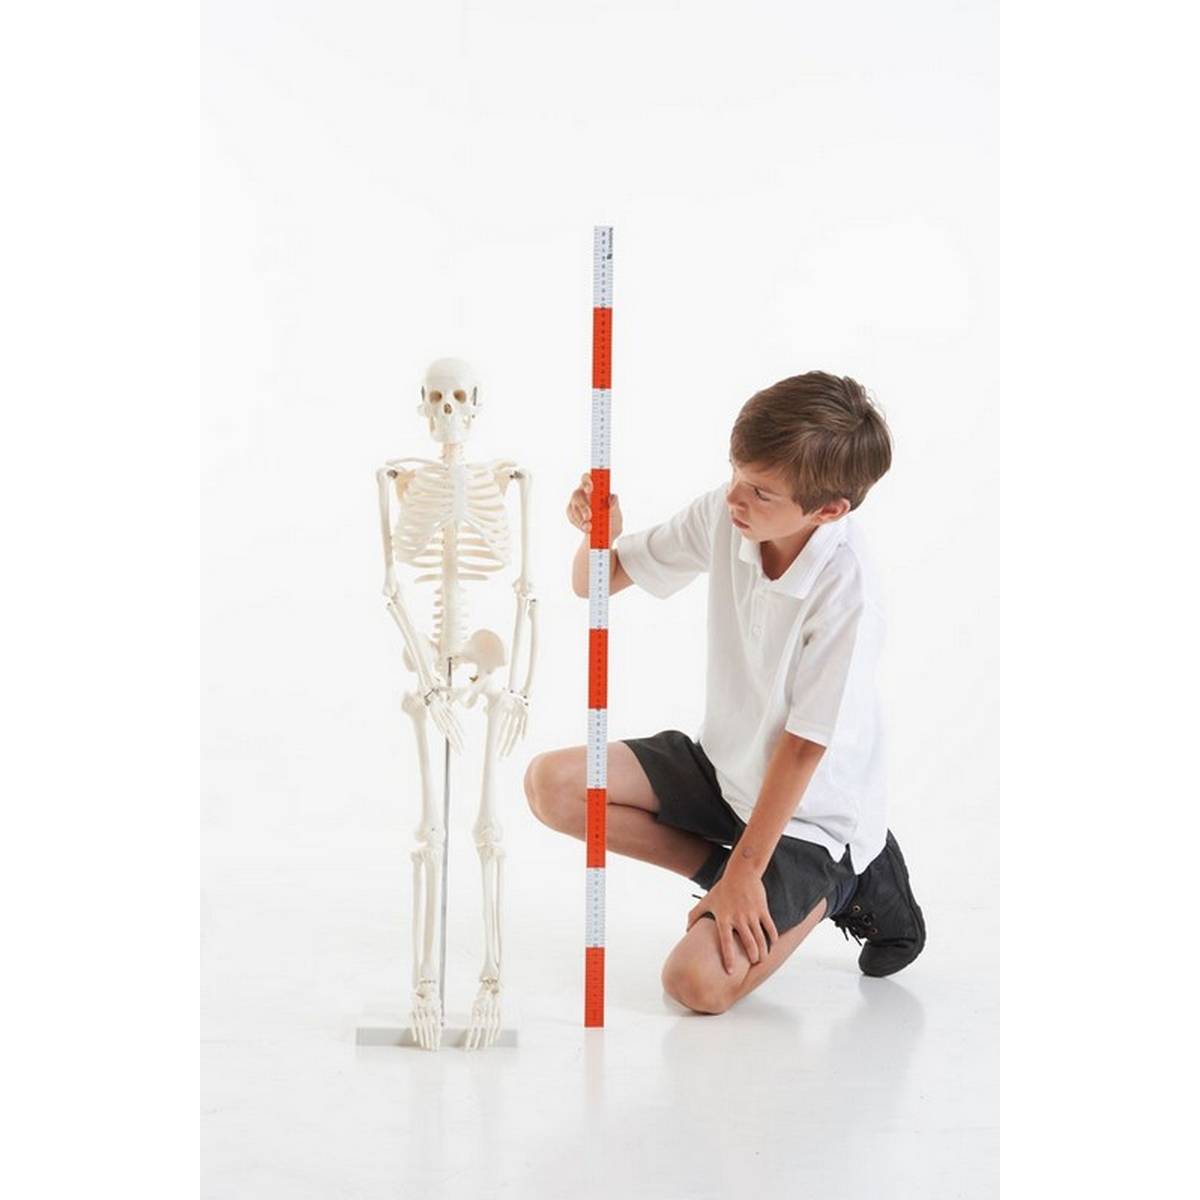 Half-Scale Skeleton